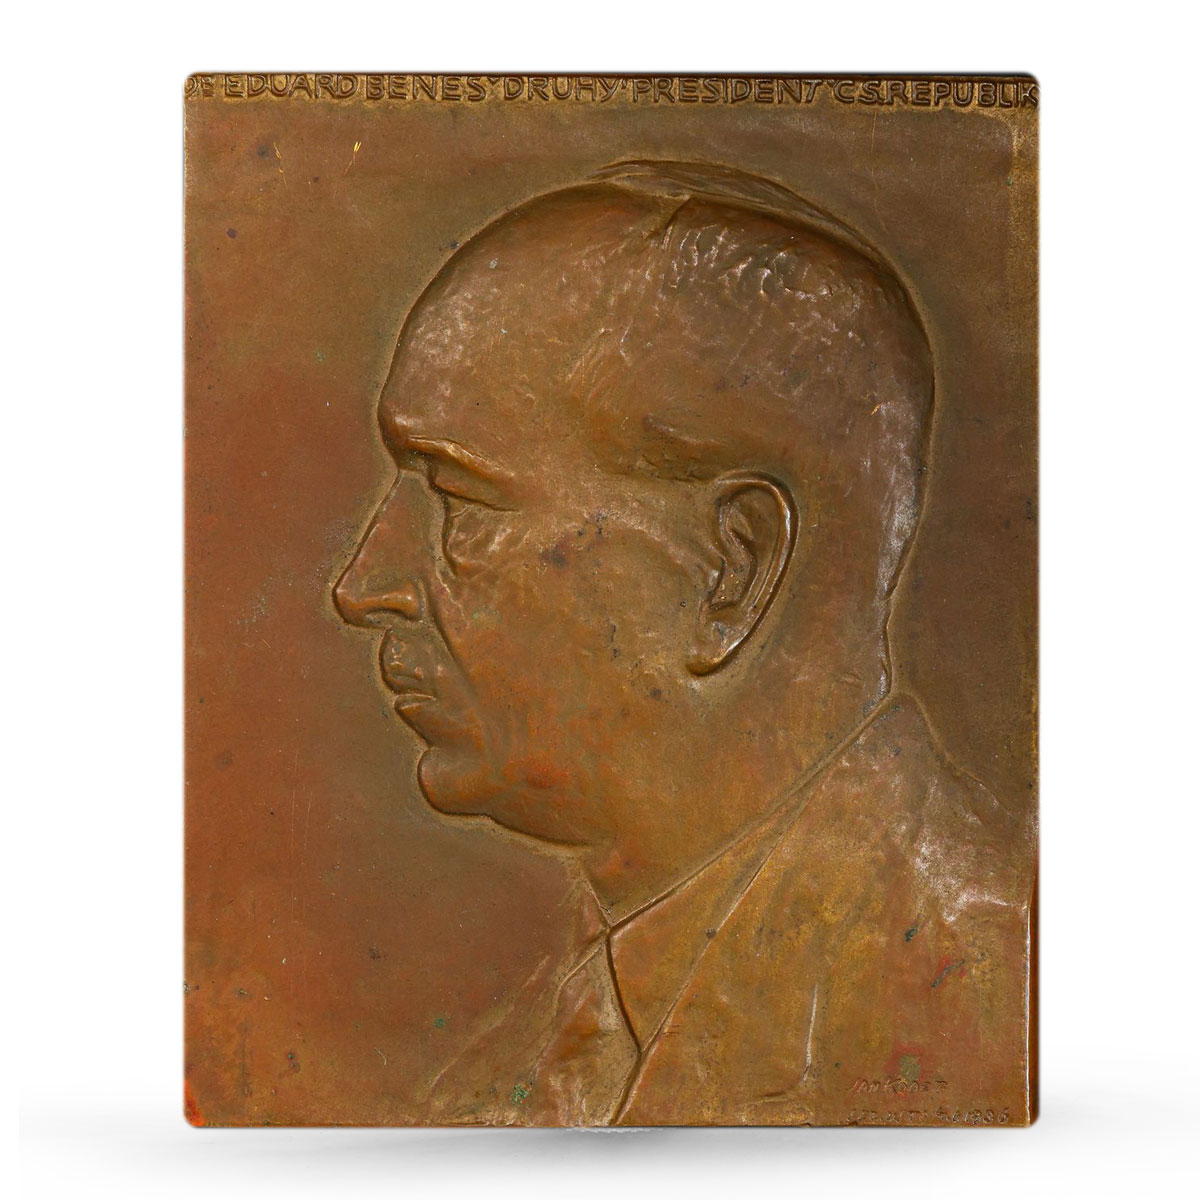 Czechoslovakia President Edvard Benes Politics SP63 PCGS bronze medal 1936